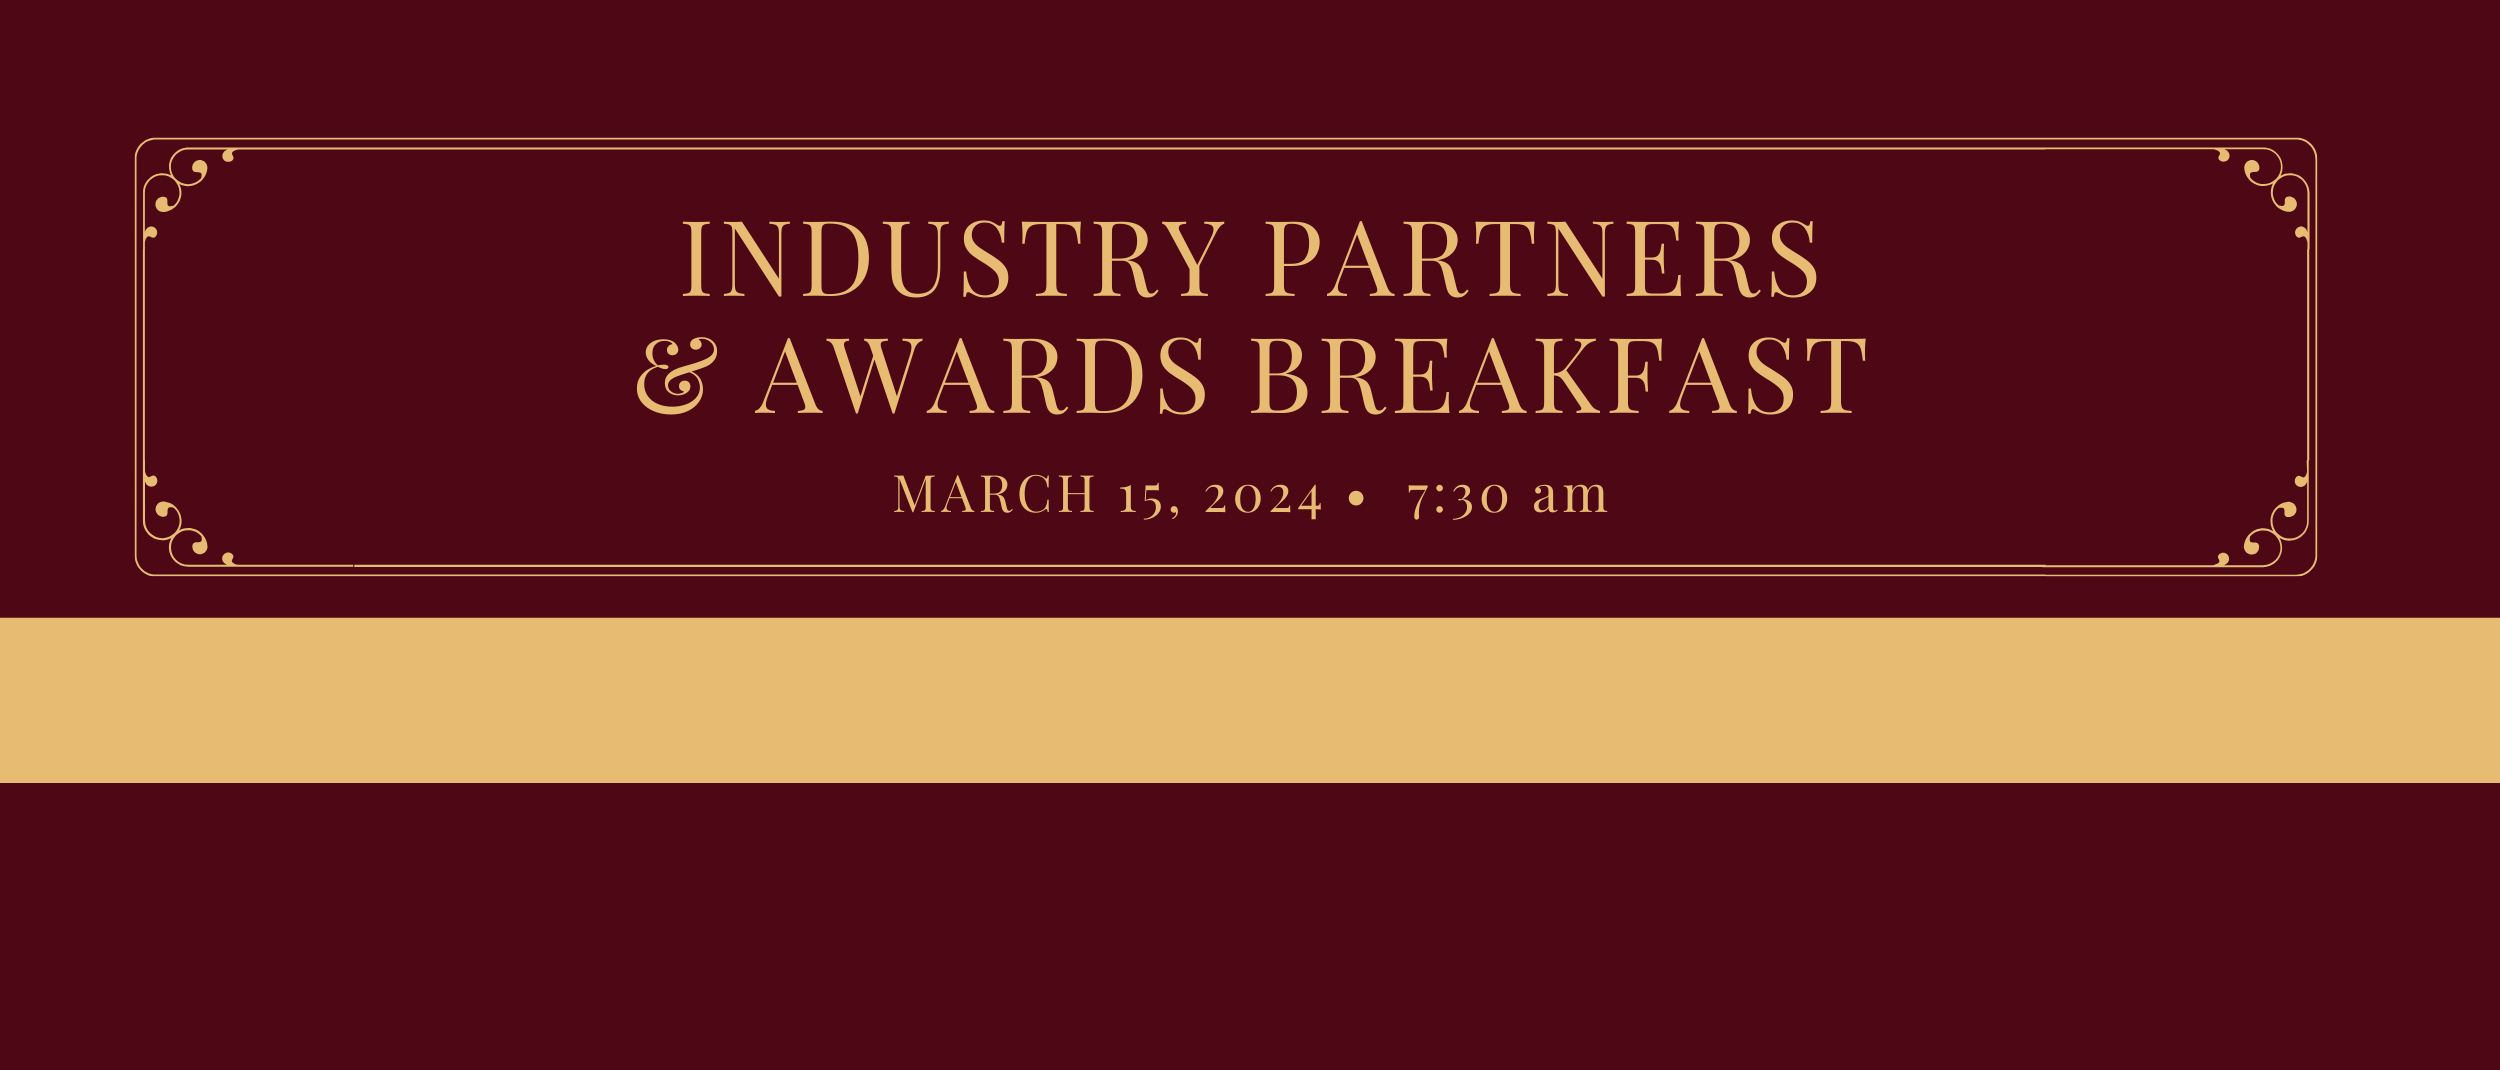 Industry Partners Breakfast hero image banner